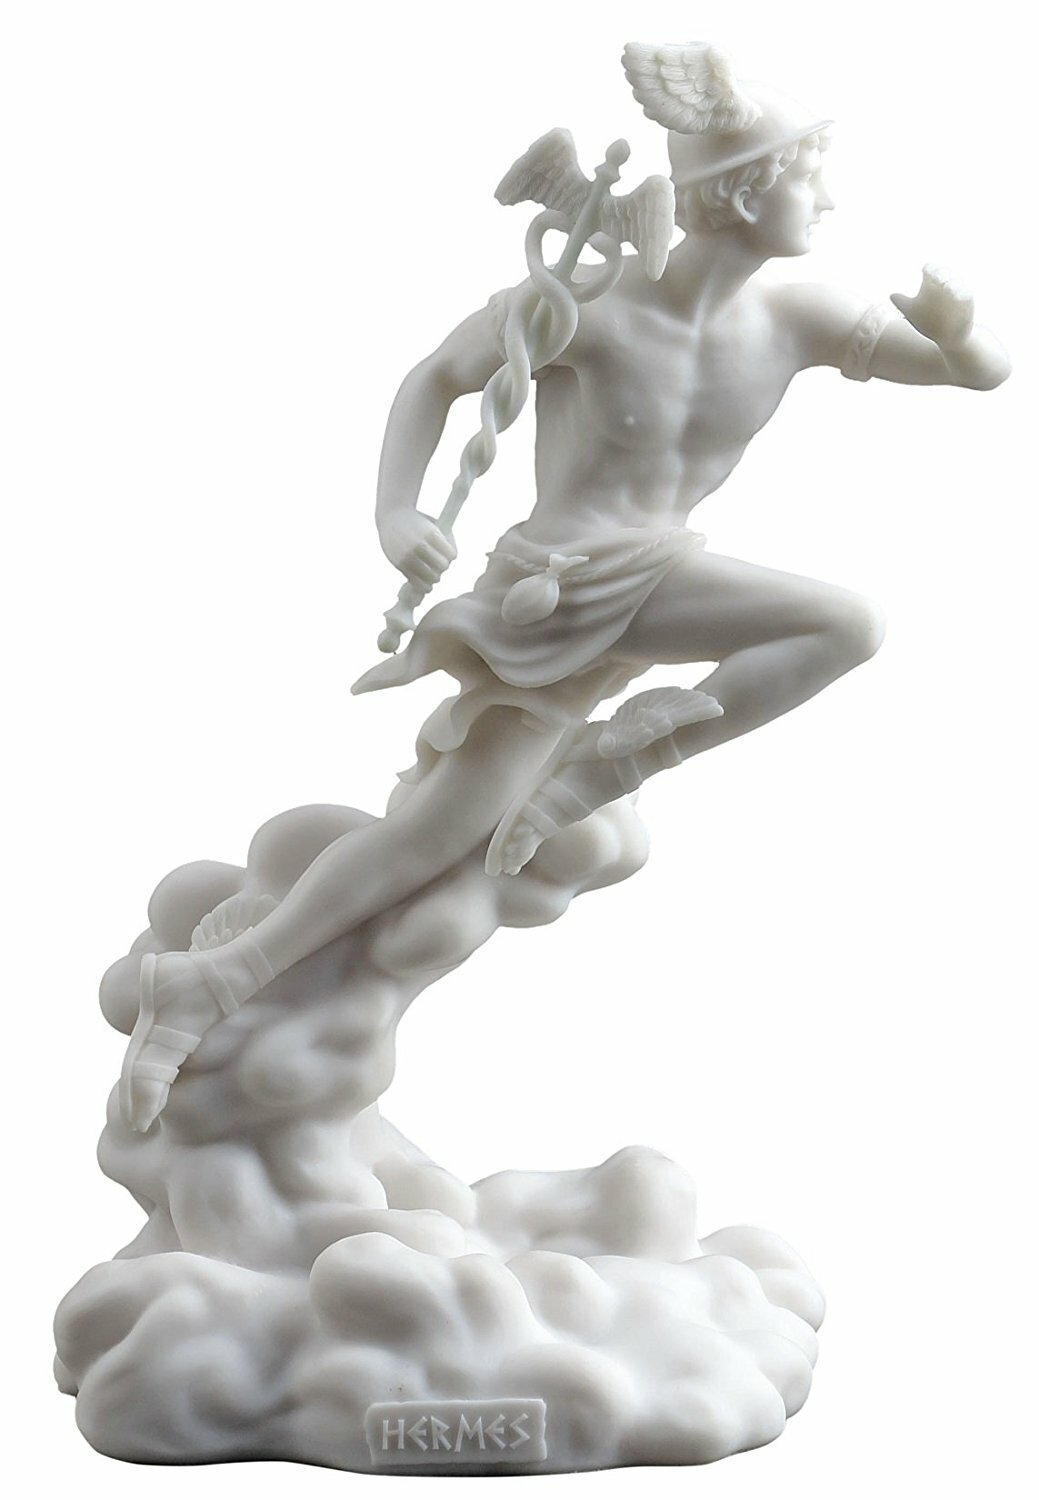 Astoria Grand Dominique Hermes Greek God Running On Clouds Figurine Reviews Wayfair